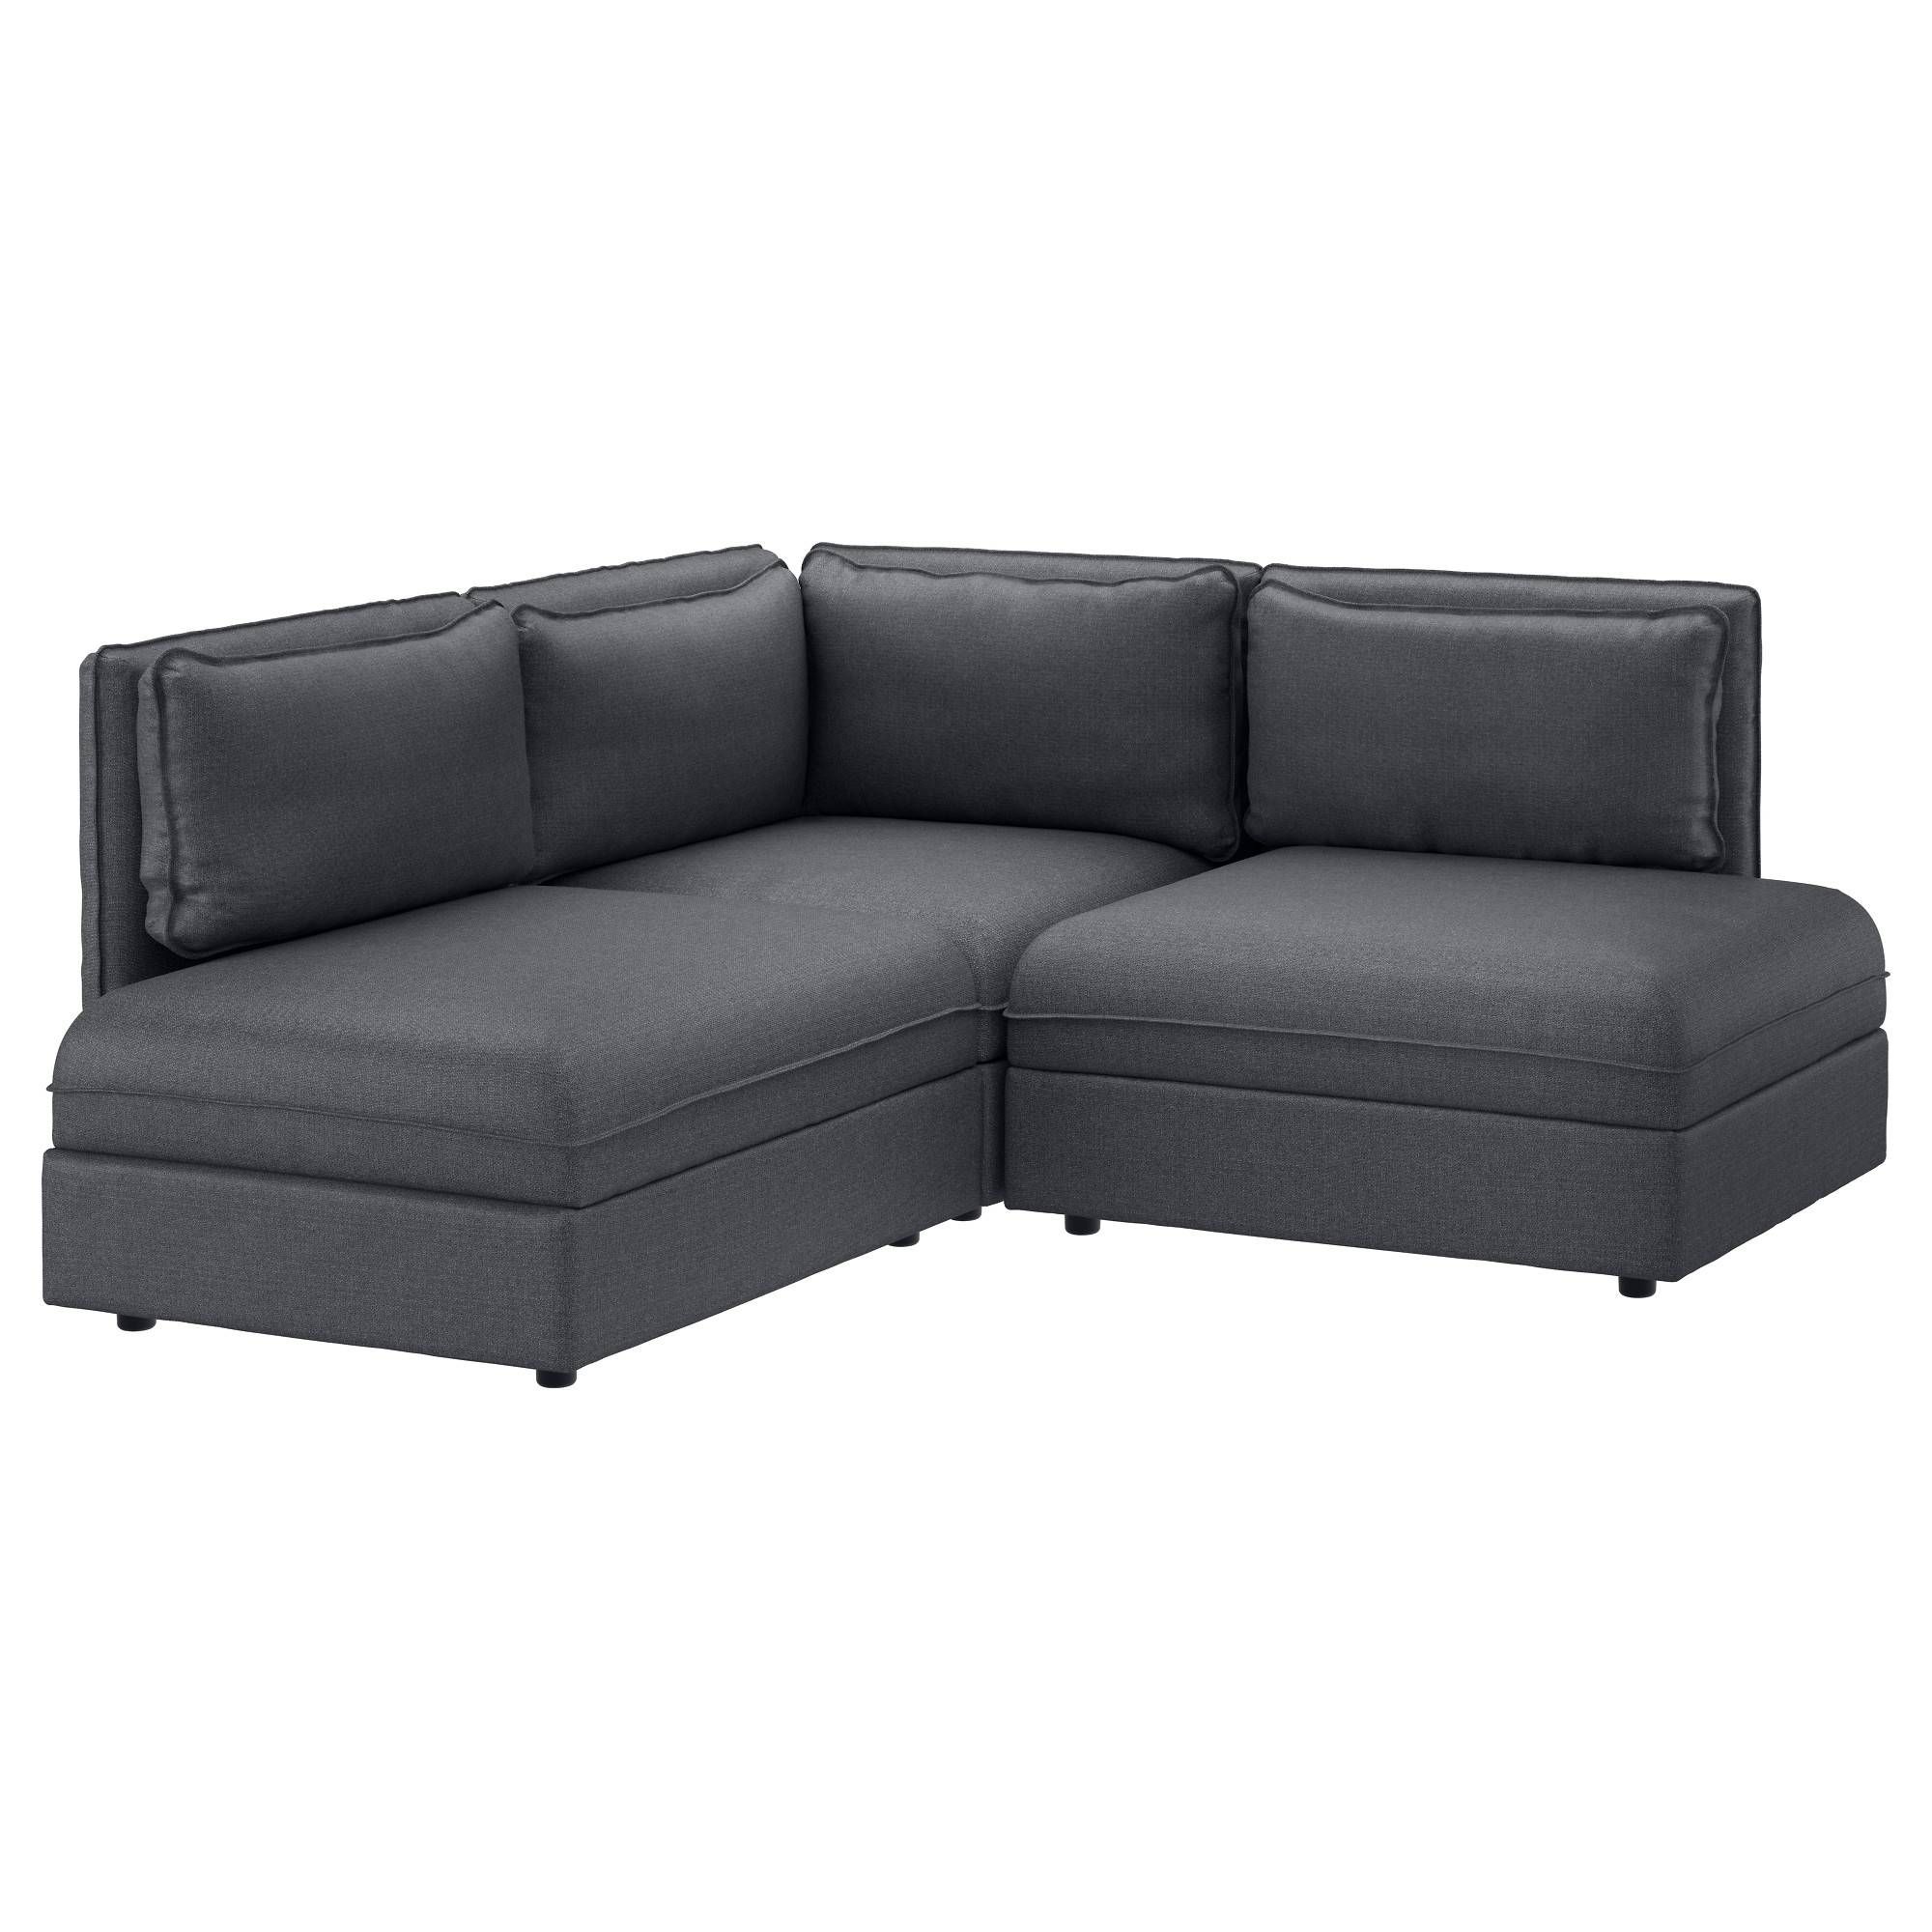 Vallentuna 3 Seat Corner Sofa Hillared Dark Grey – Ikea With Regard To Corner Sofas (View 9 of 15)